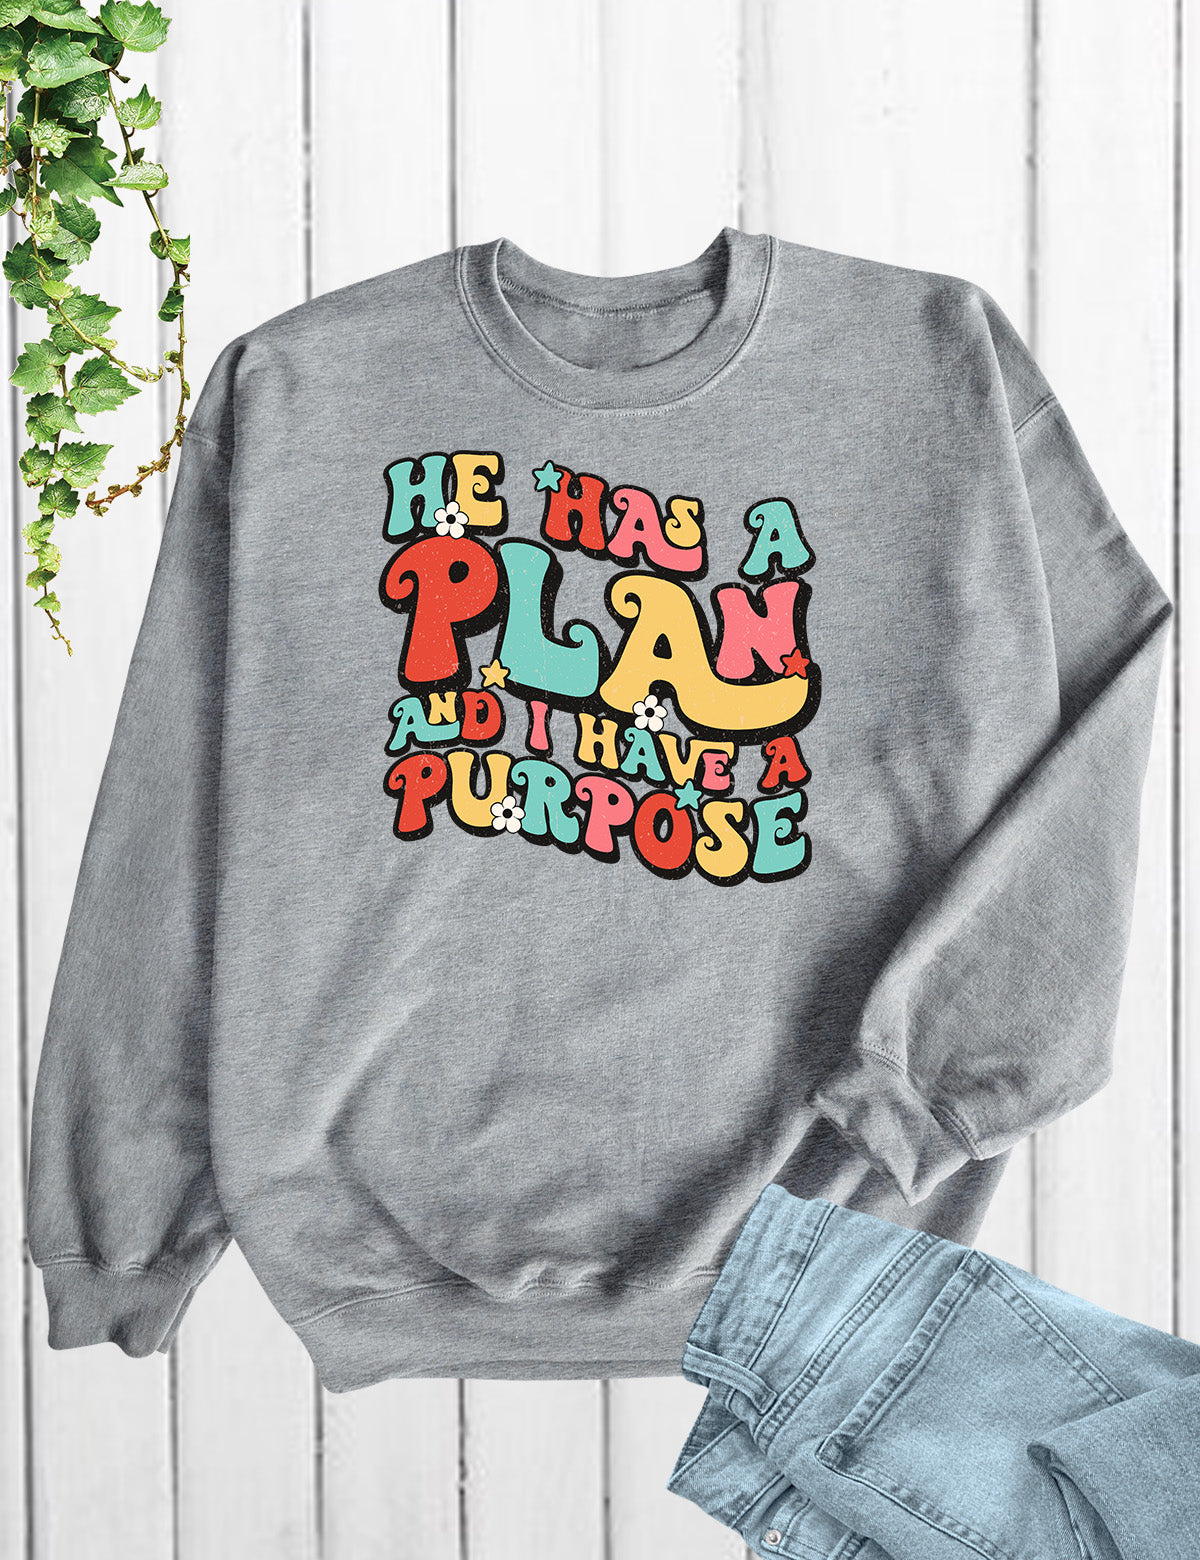 God's Plan Sweatshirt, I have a Purpose Jumper